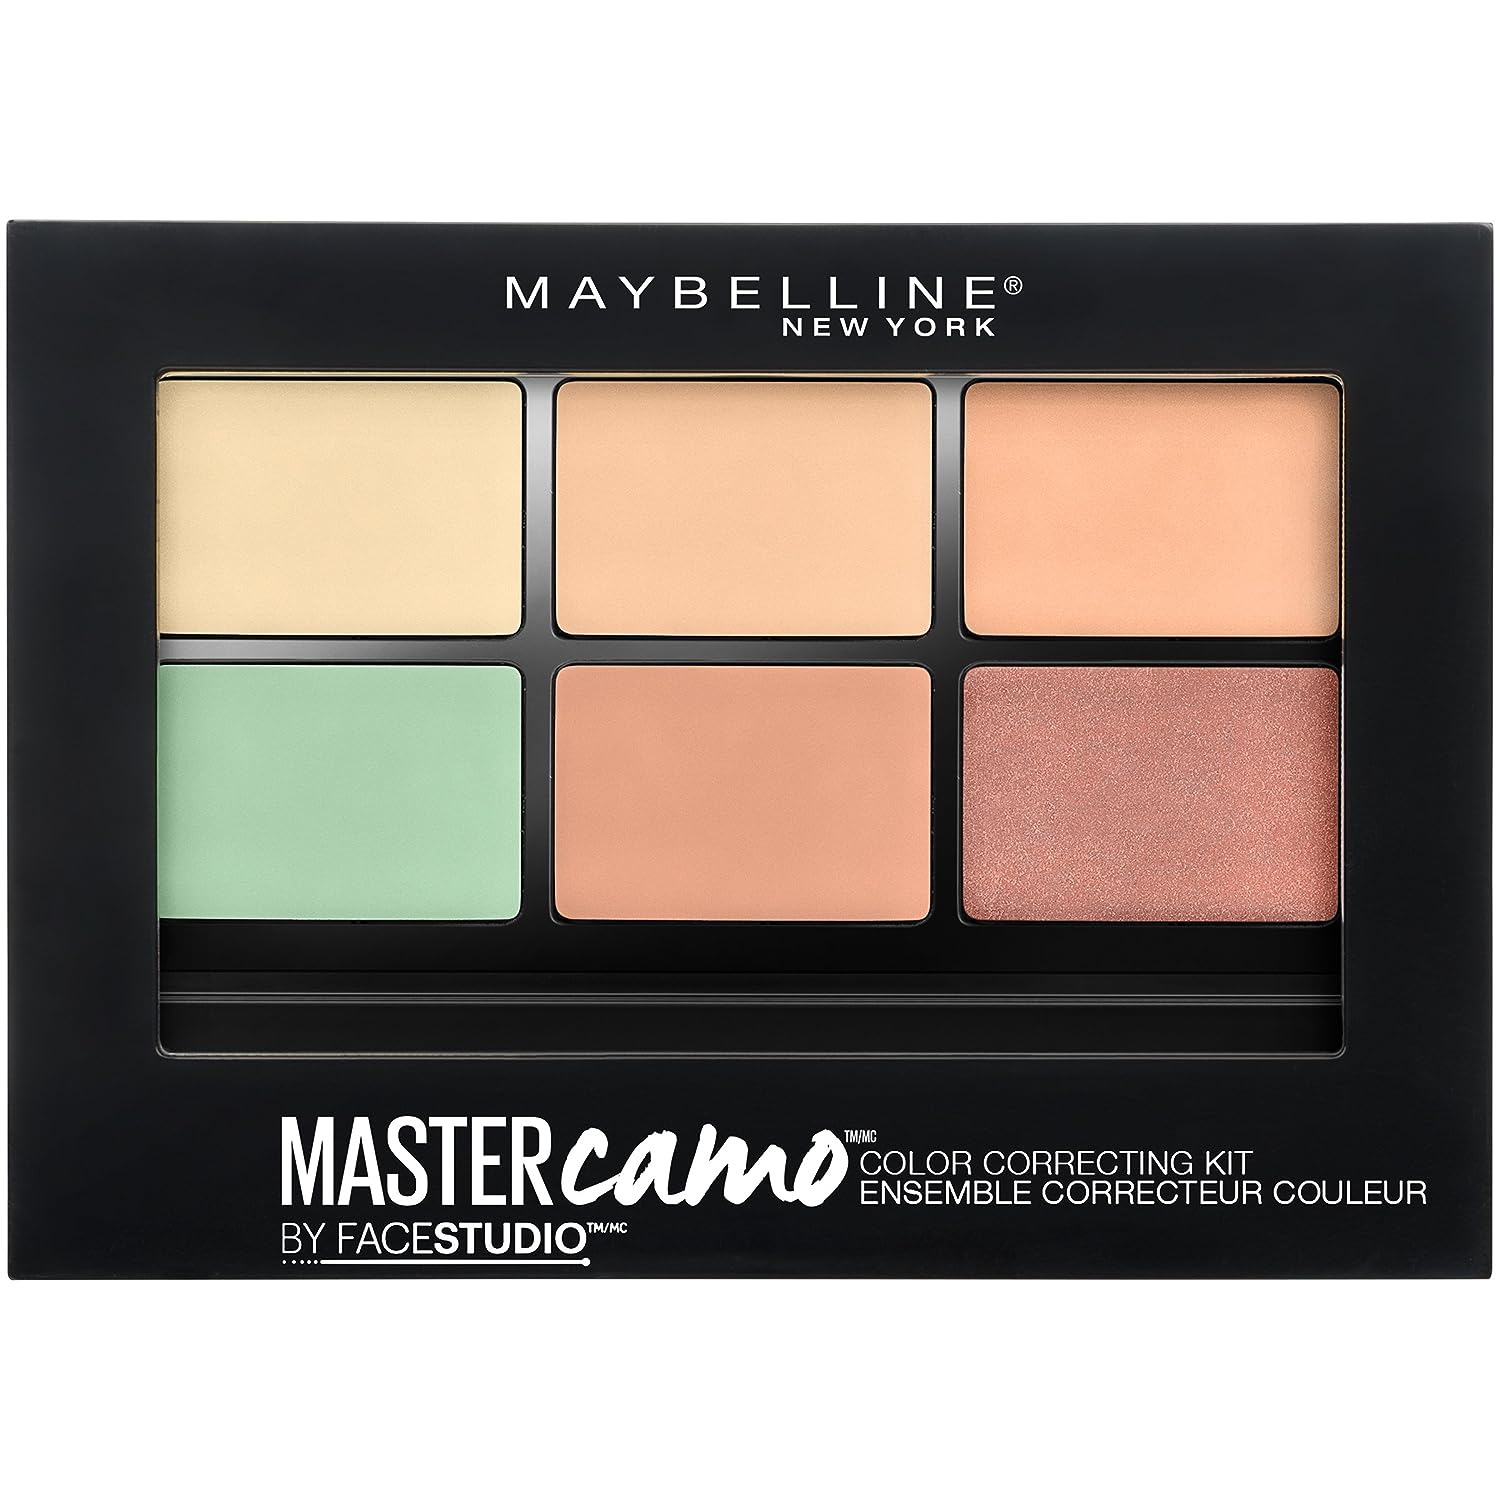 Maybelline New York Facestudio Master Camo Color Correcting Kit, Light, 0.21